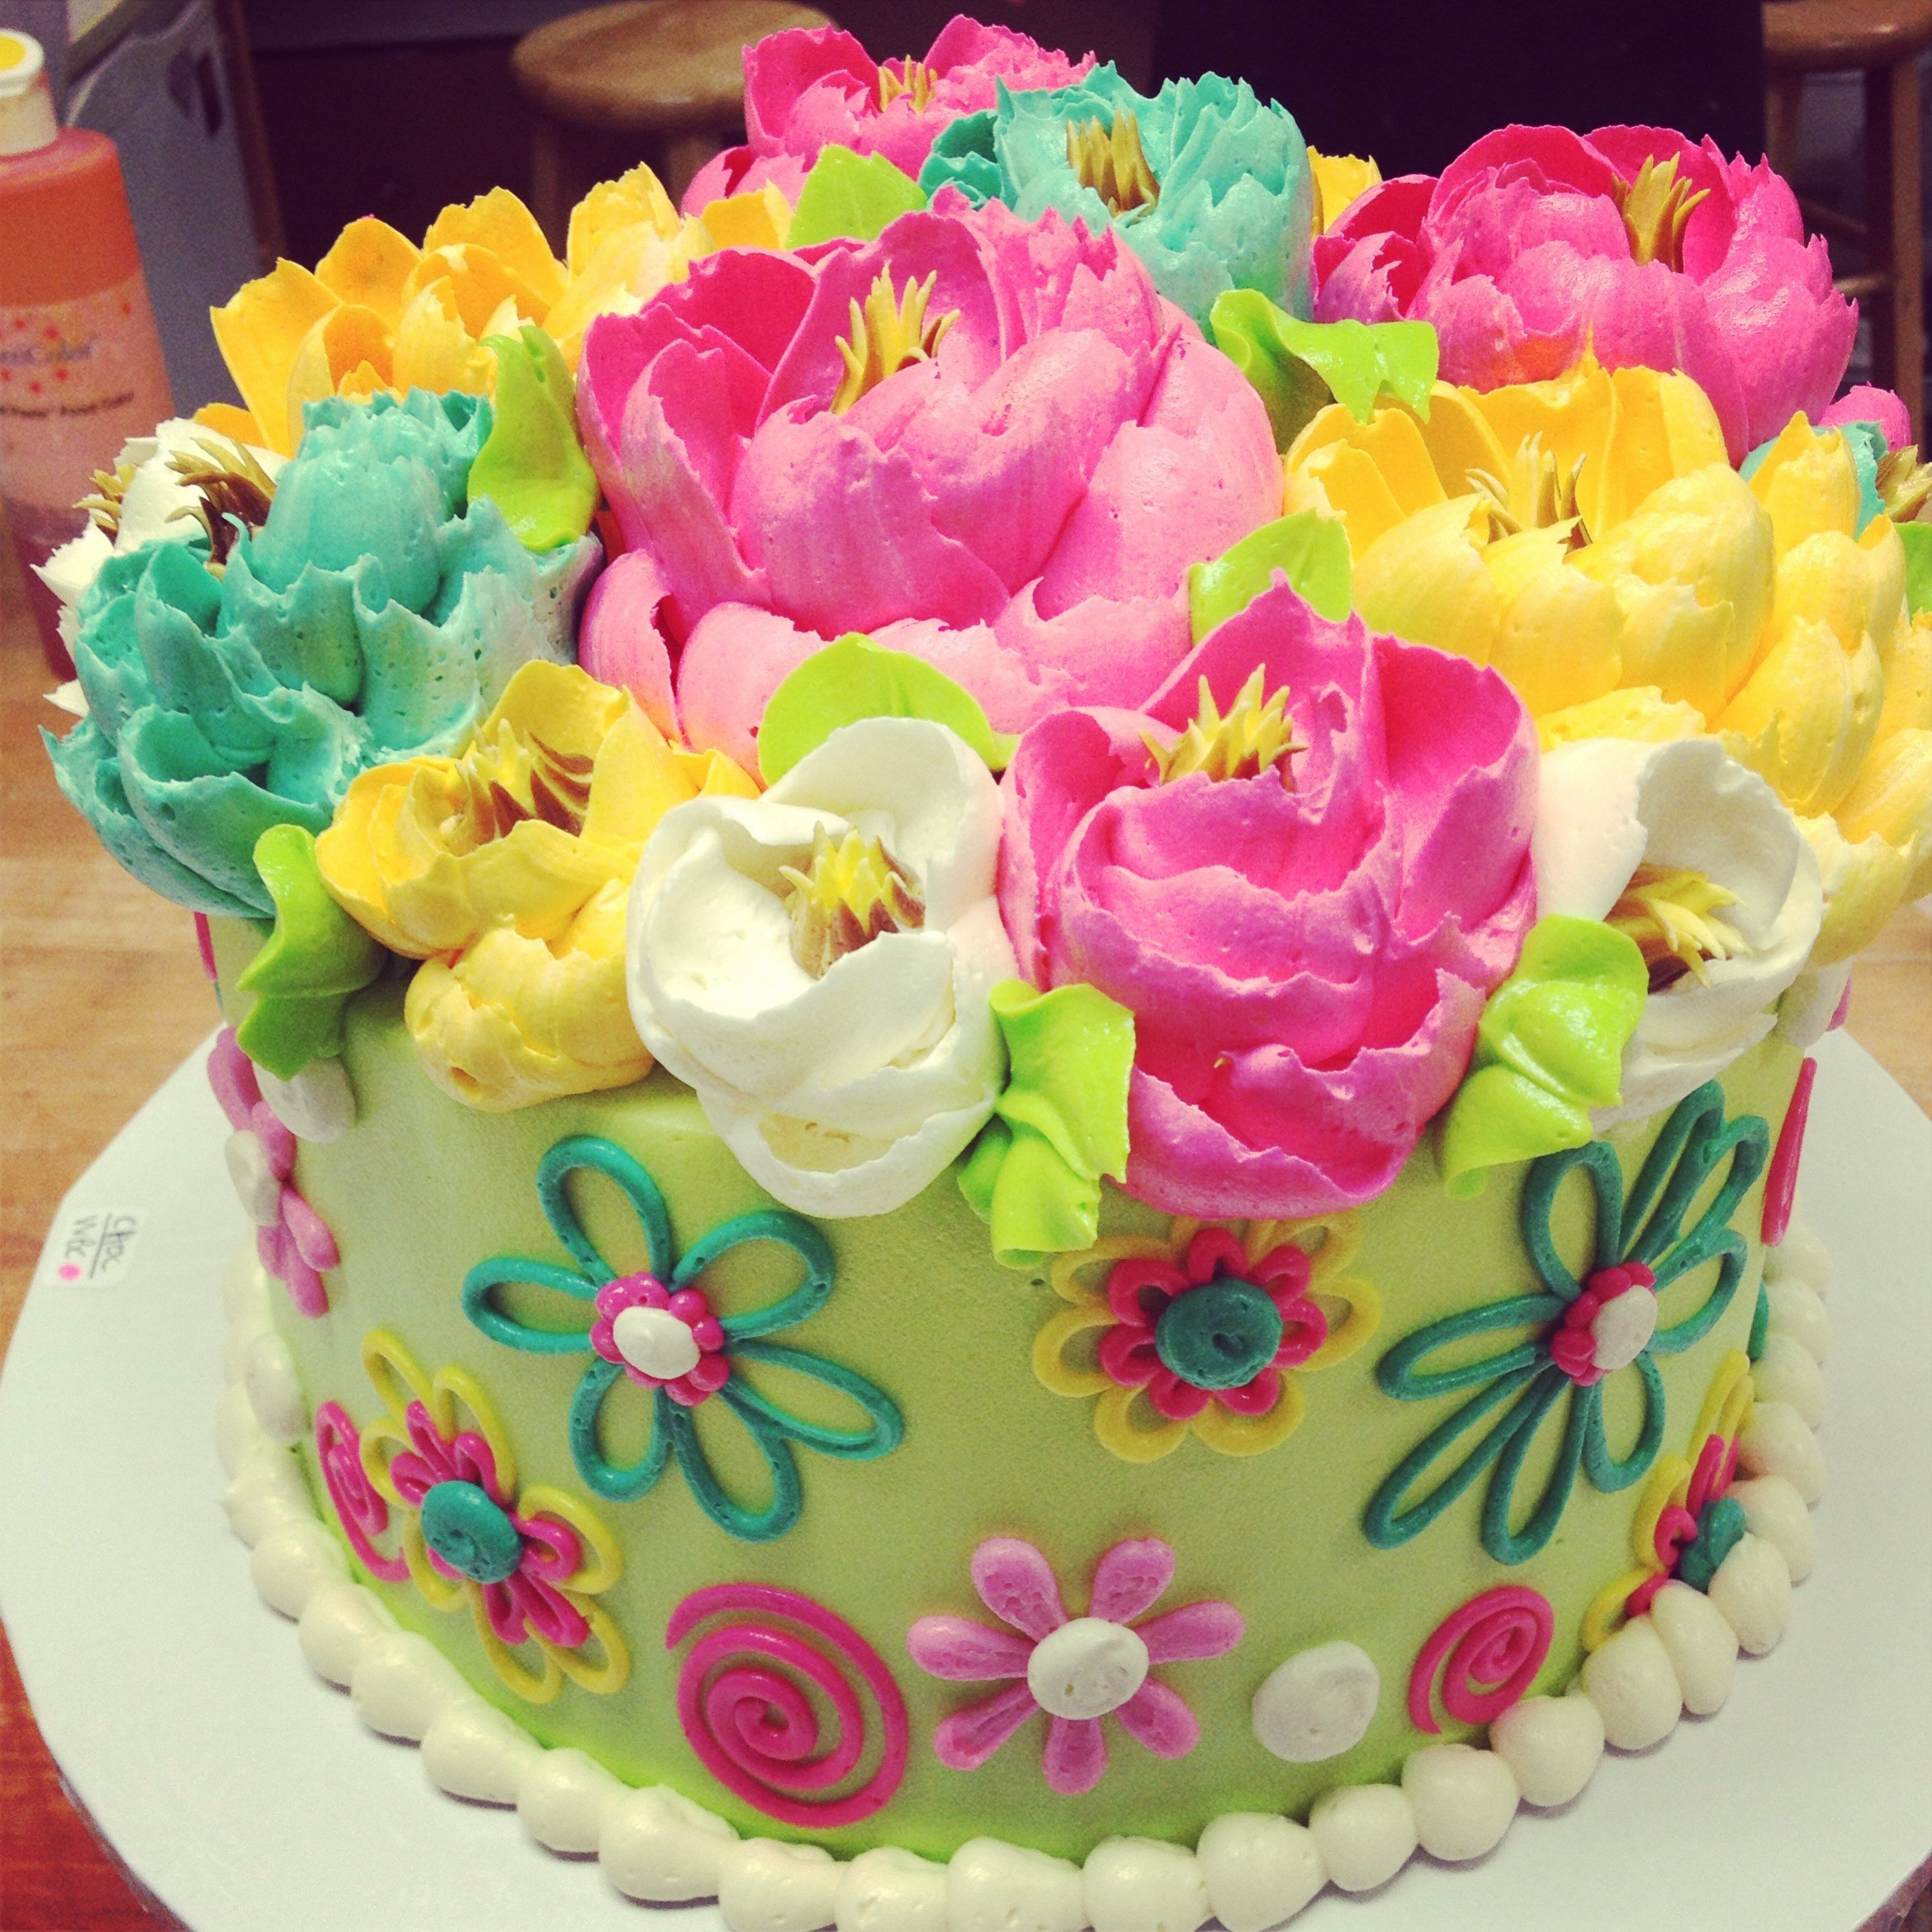 Happy Birthday Flowers And Cake
 Happy Birthday Flower And Cake